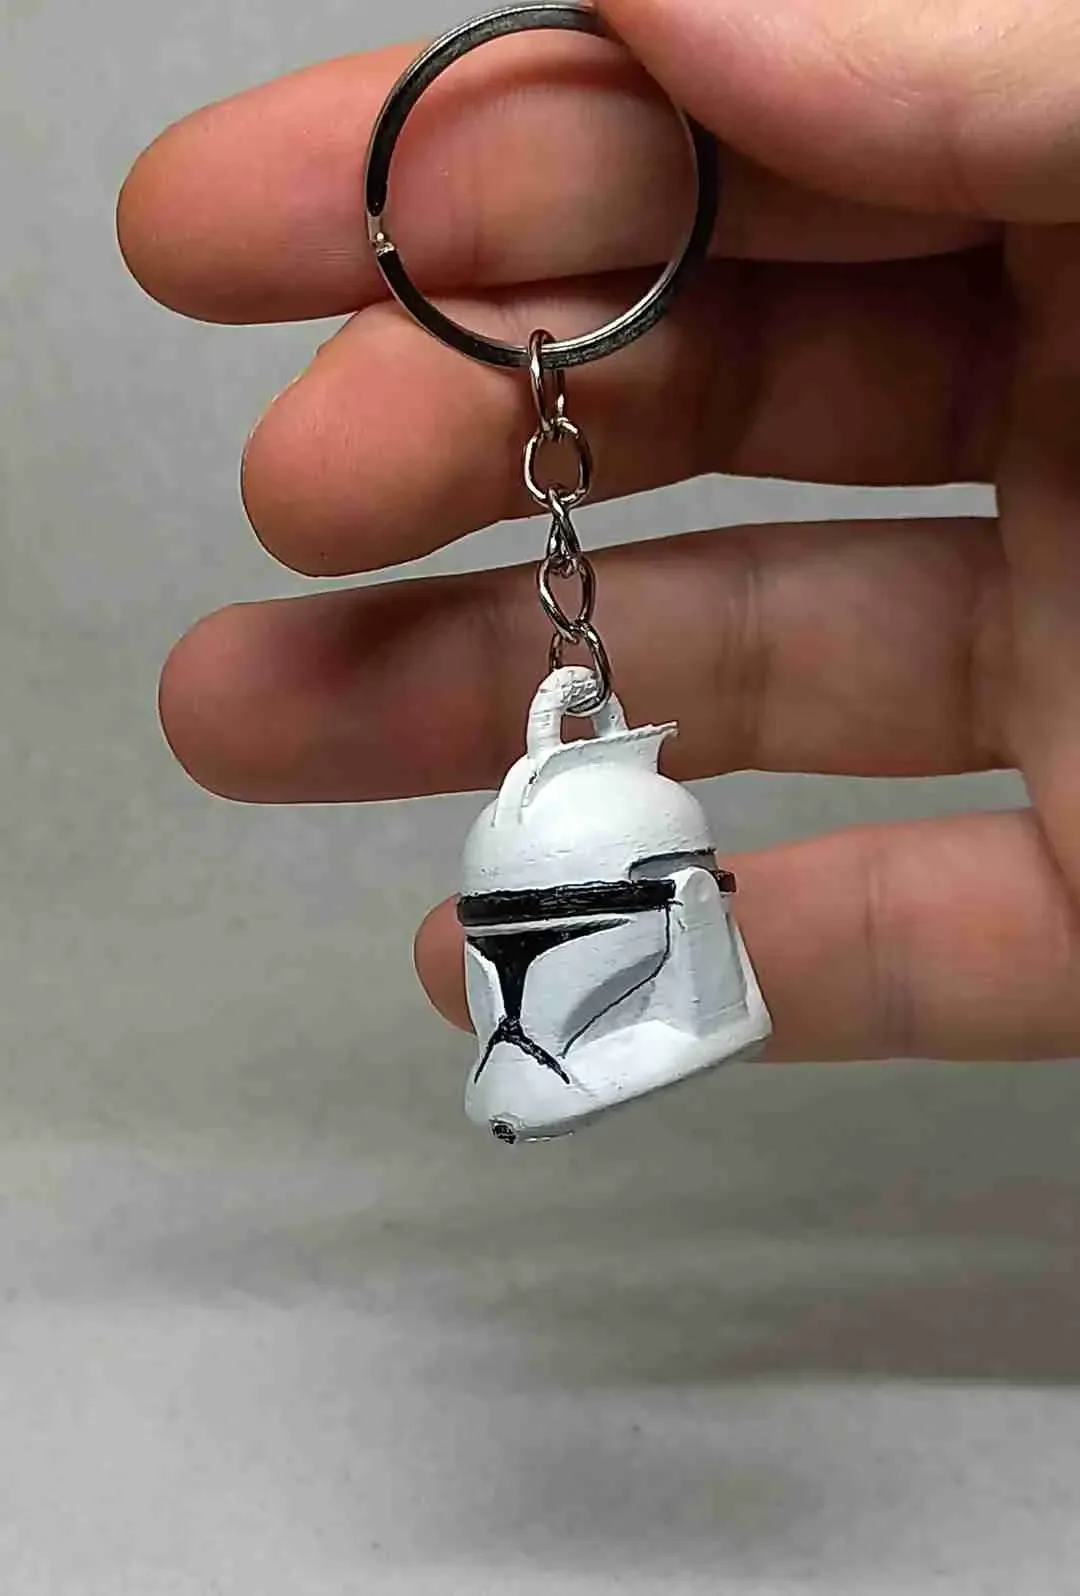 CloneTrooper Keychain